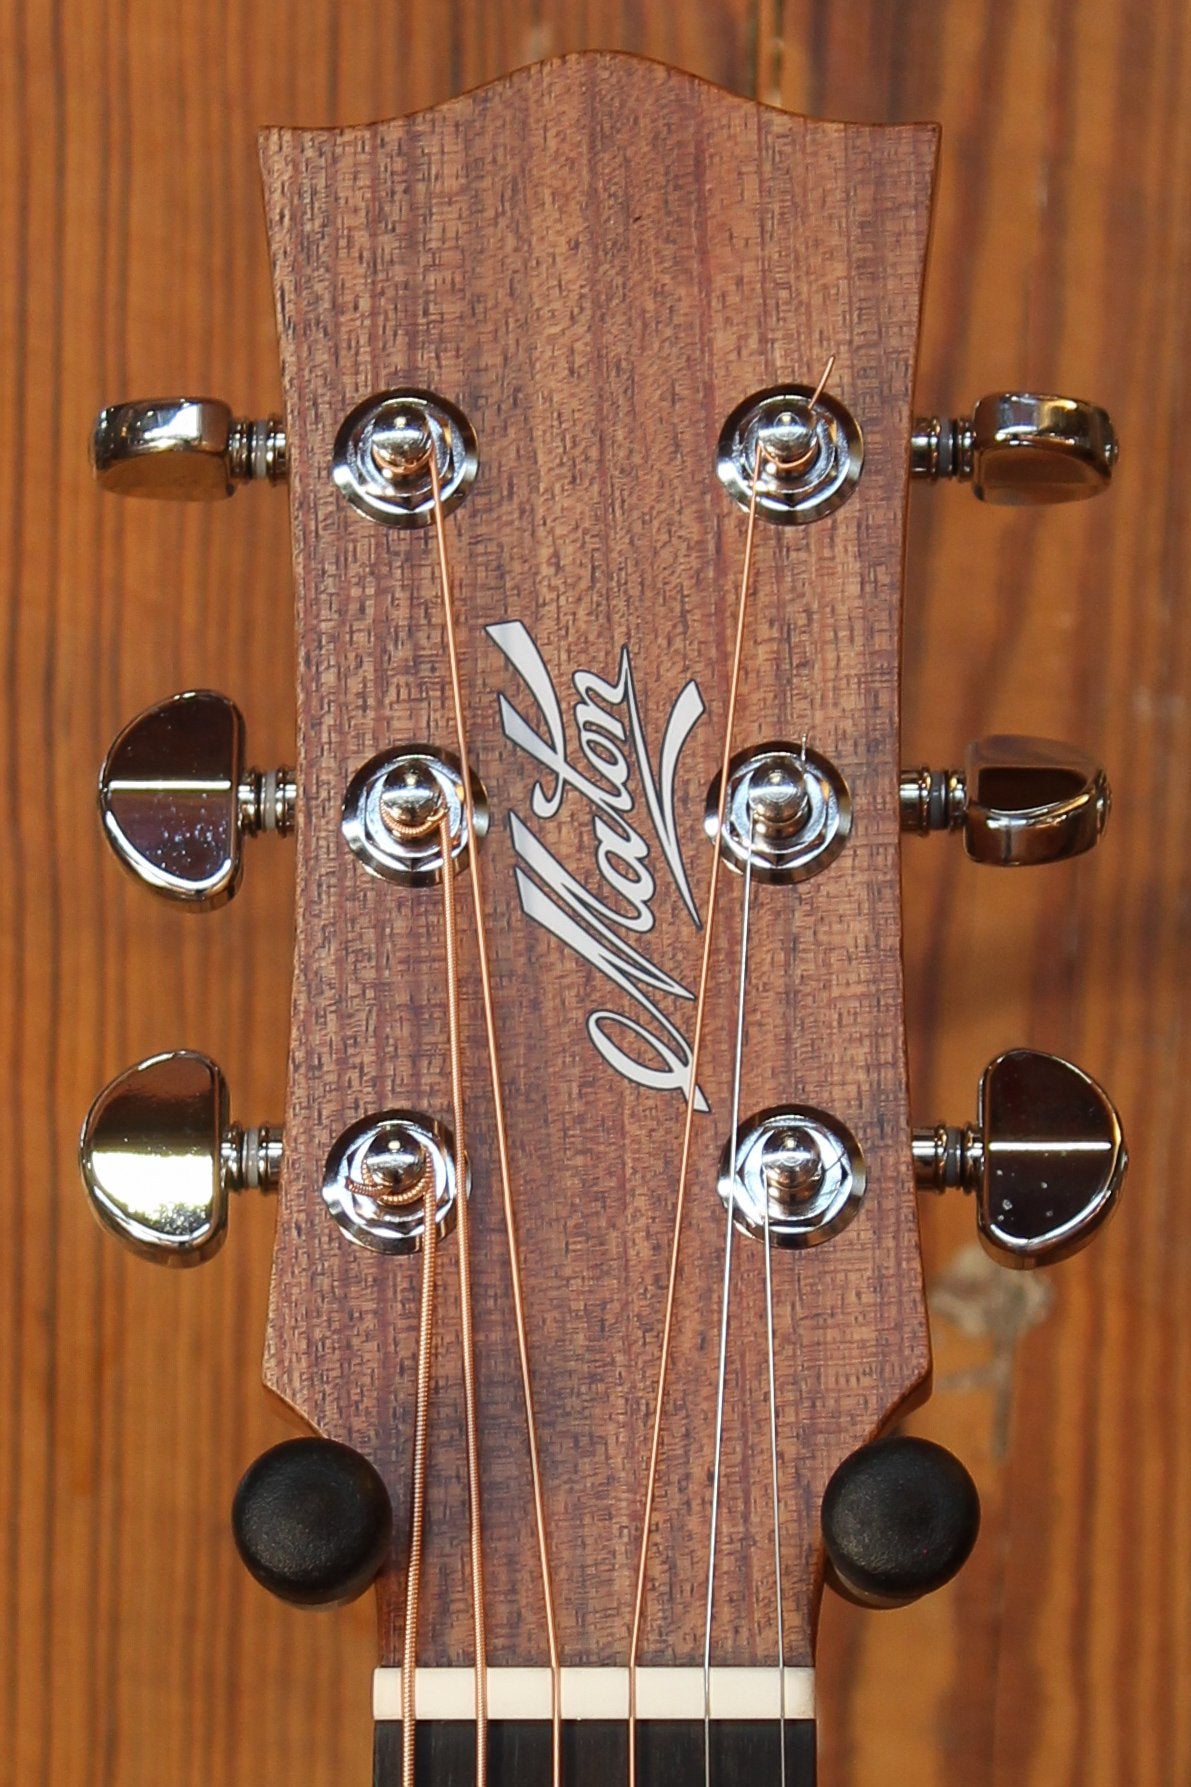 Maton Guitars SRS808 - 14189 - Artisan Guitars